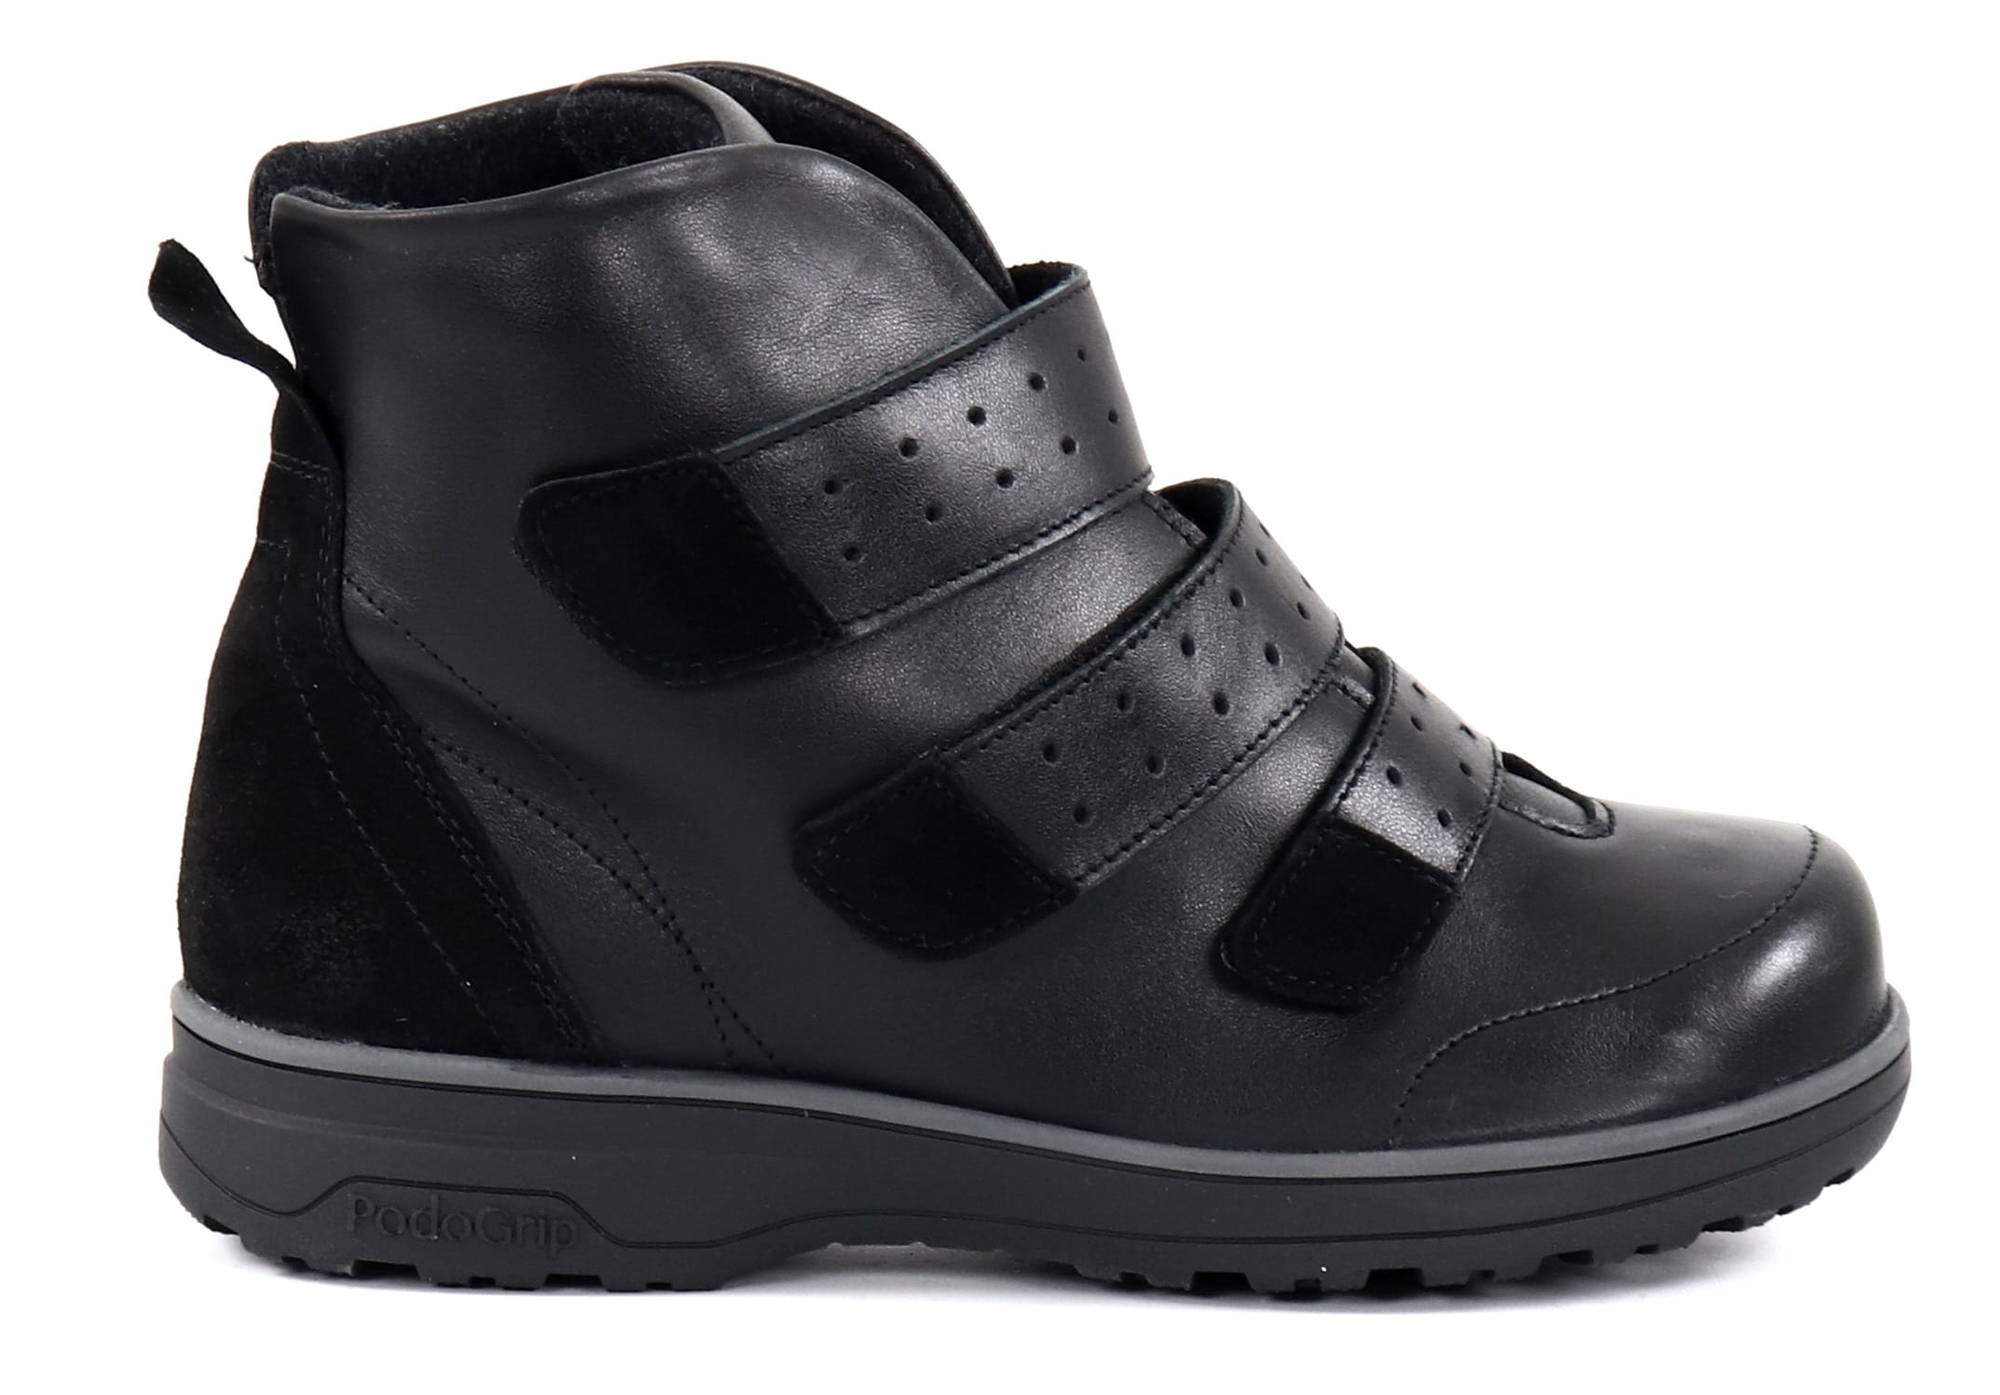 Podowell Leather Ankle Boots Artik, black - Stilettoshop.eu webstore